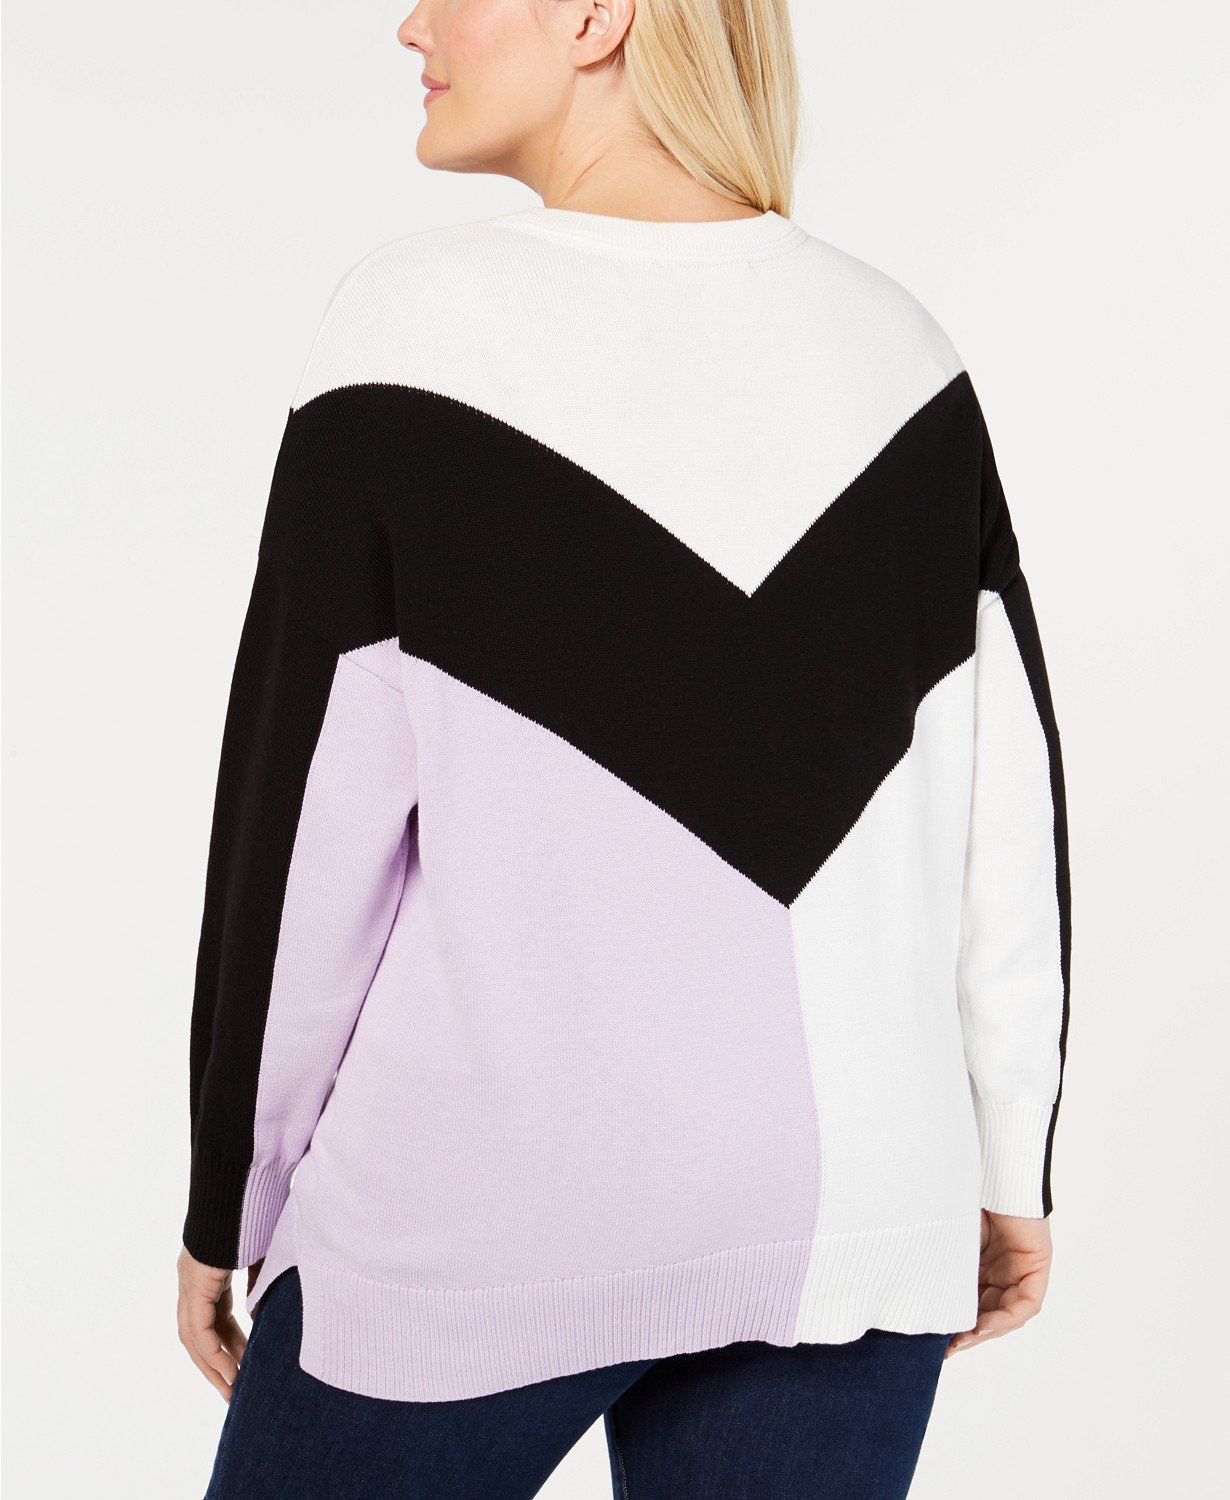 Tommy Hilfiger Cotton Plus Size Colorblocked Sweater - TopLine Fashion Lounge